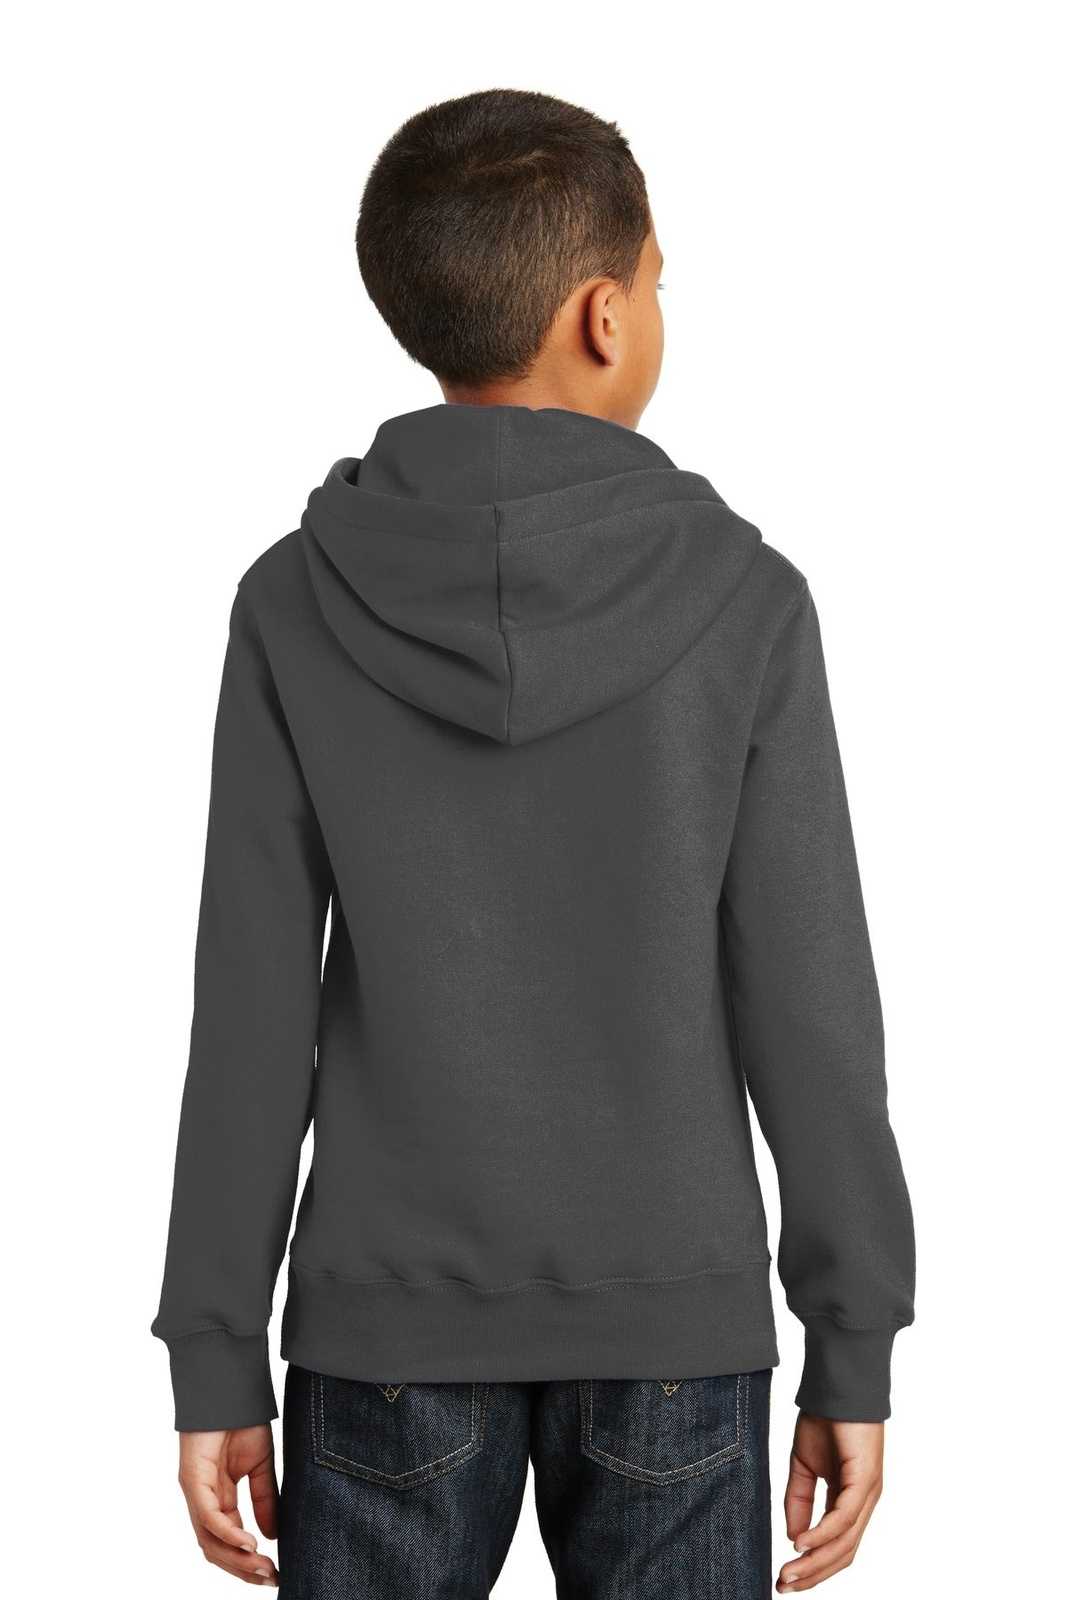 Port &amp; Company PC850YH Youth Fan Favorite Fleece Pullover Hooded Sweatshirt - Charcoal - HIT a Double - 2